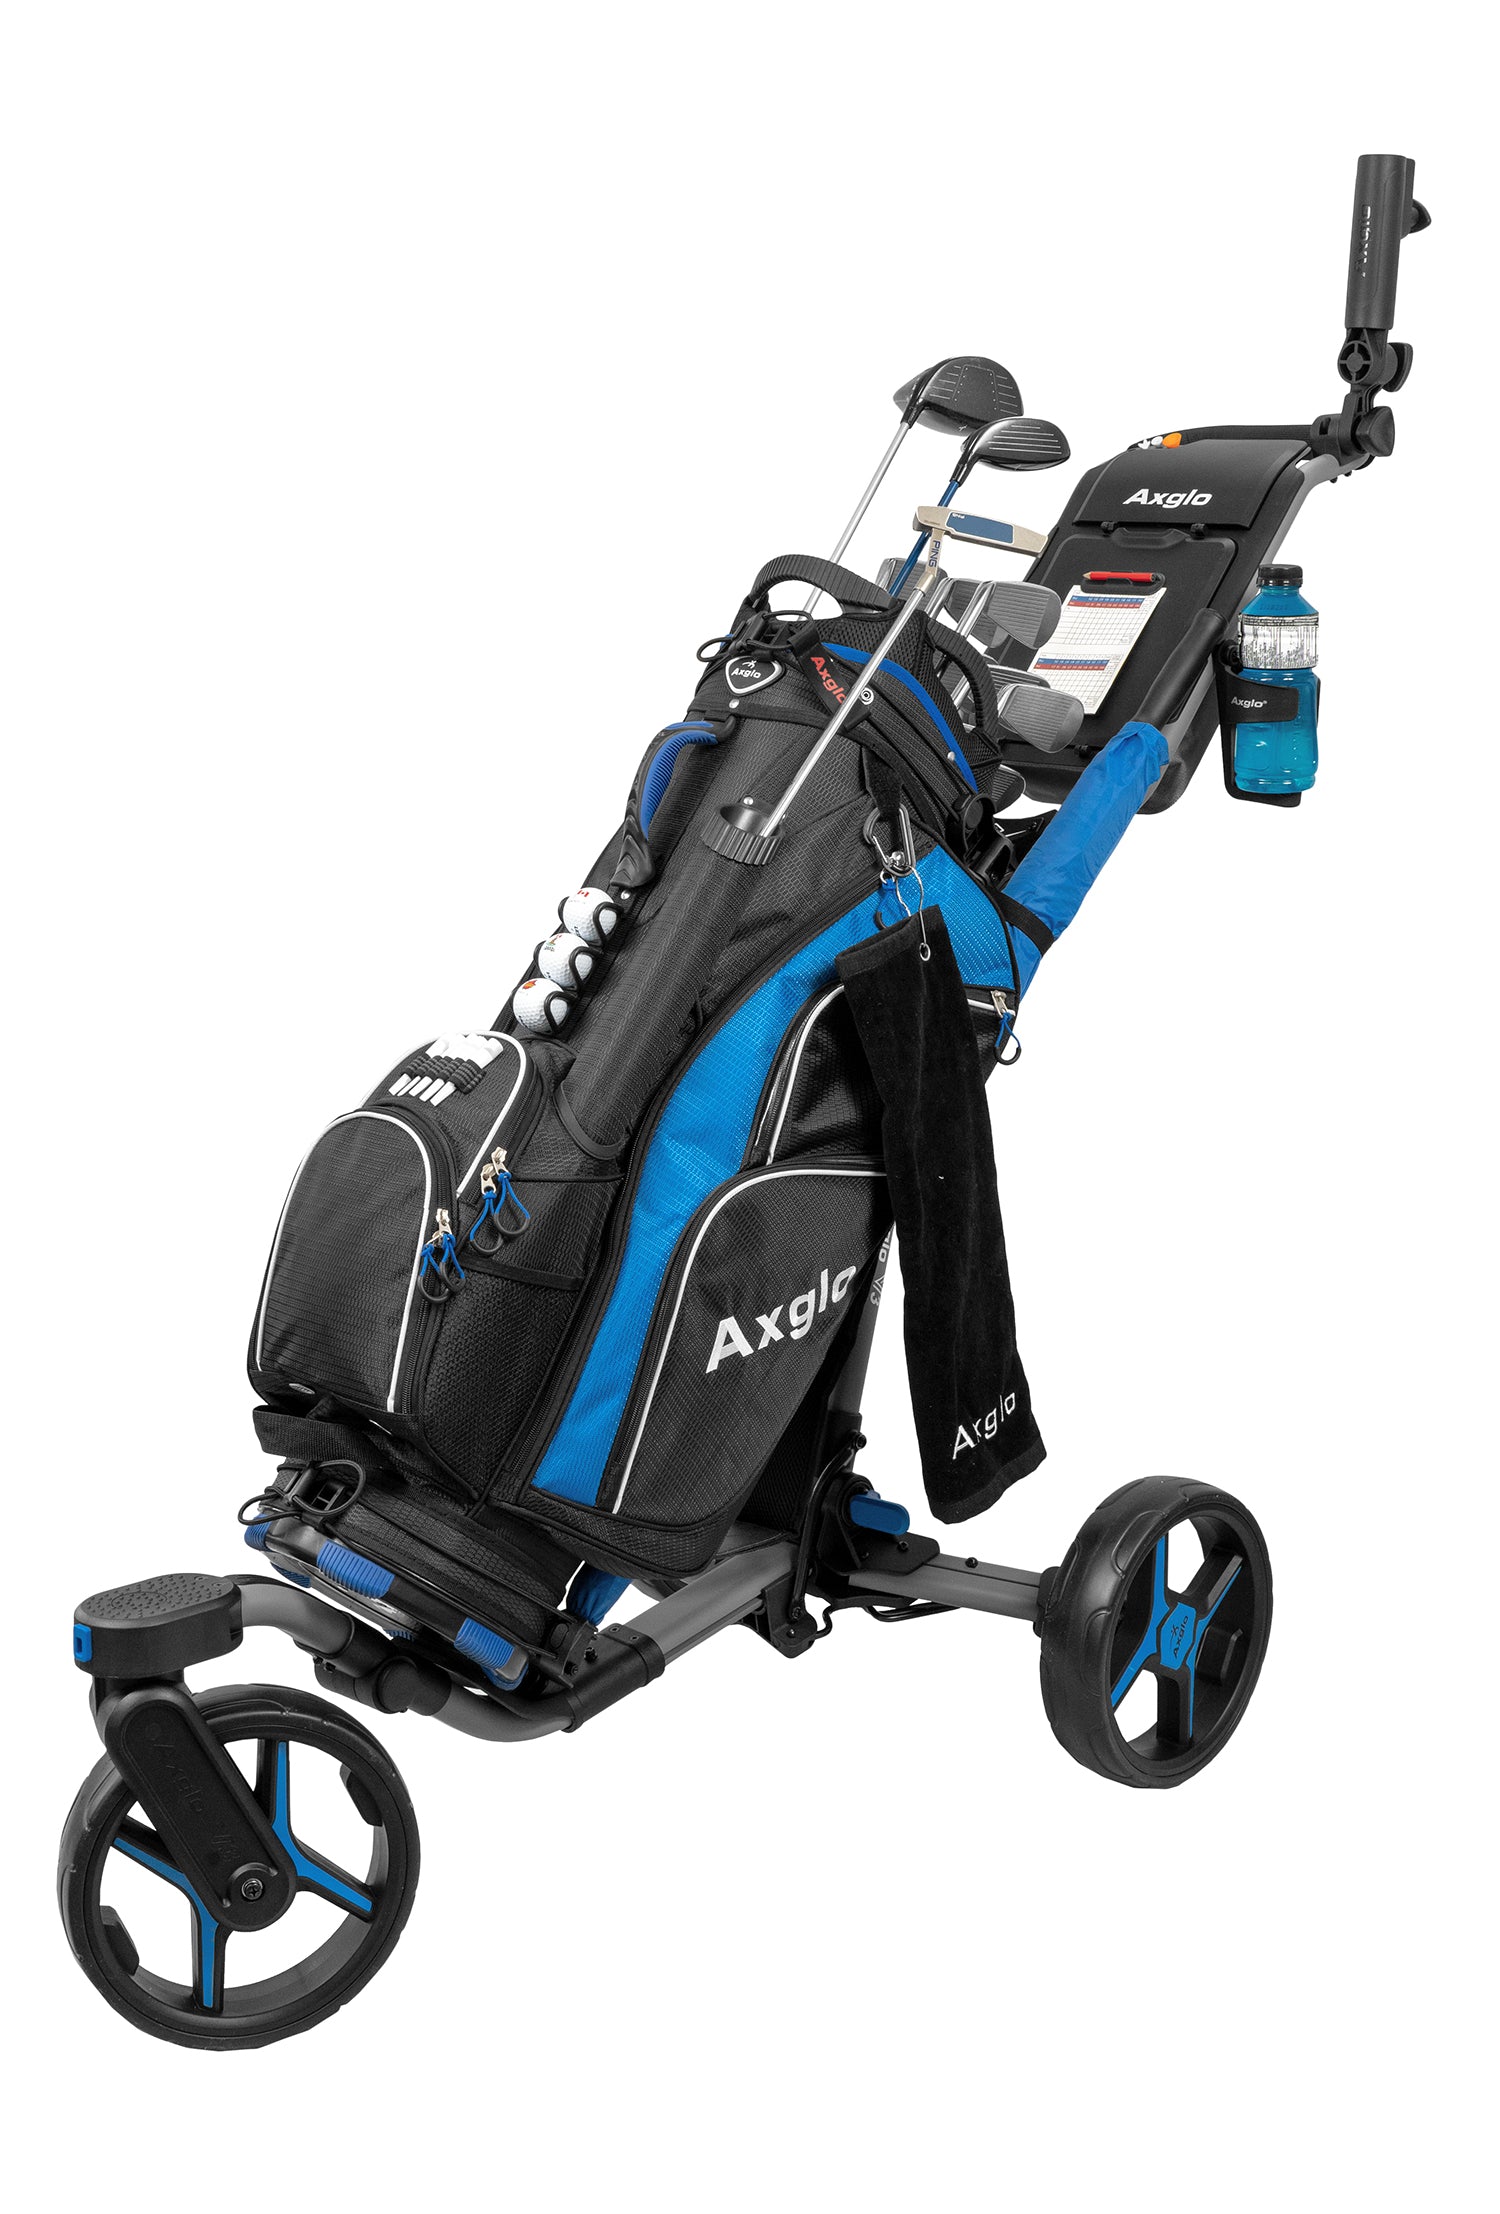 Axglo V3 Golf Push Cart with bag